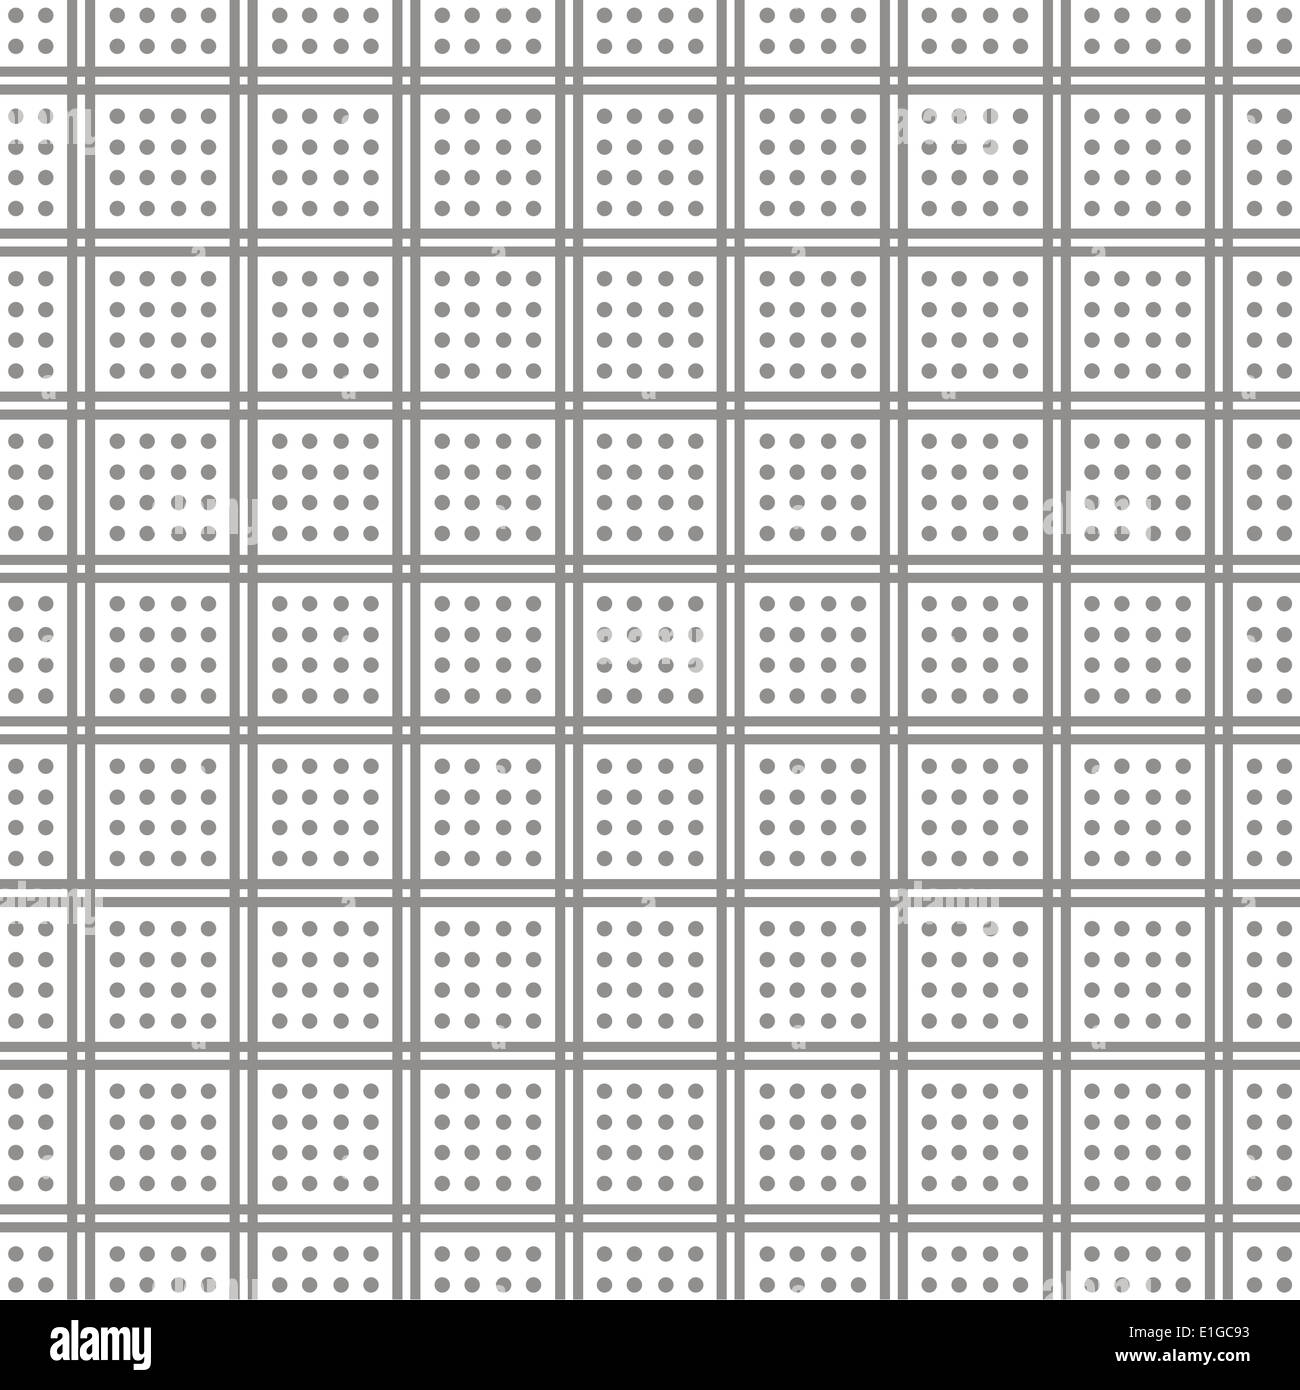 Background of seamless dots pattern Stock Photo